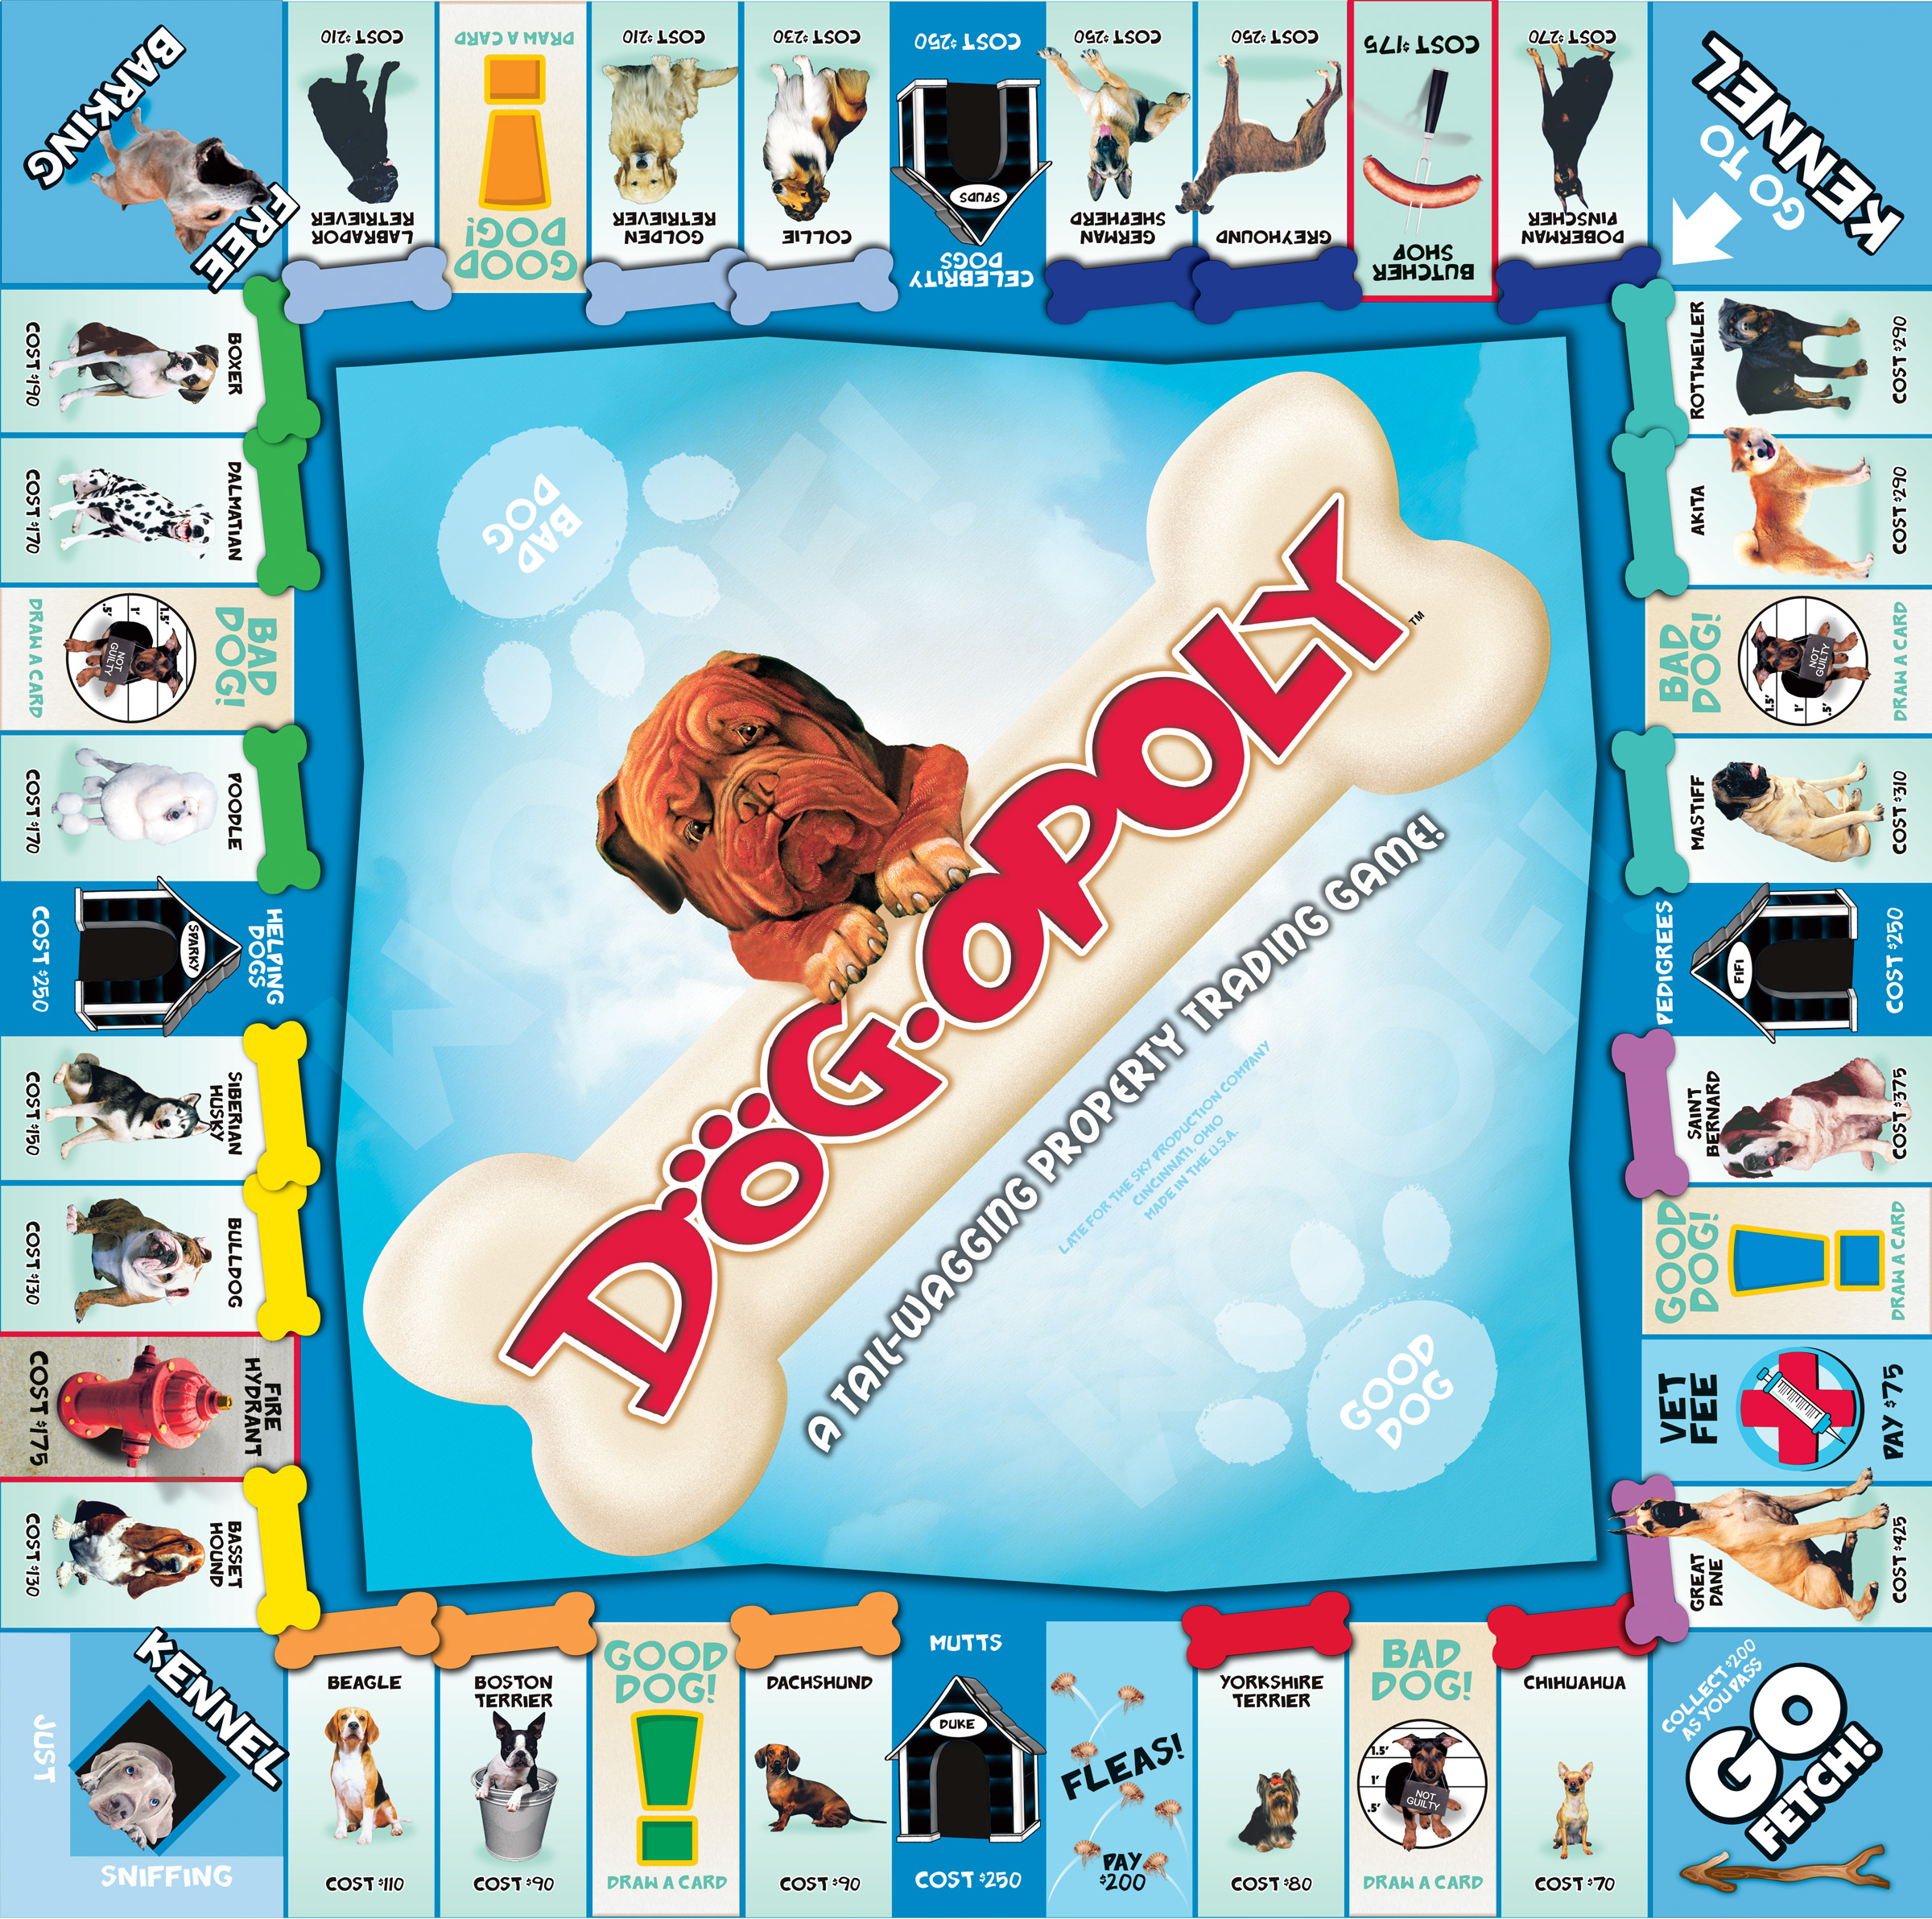 DOG-OPOLY Board Game